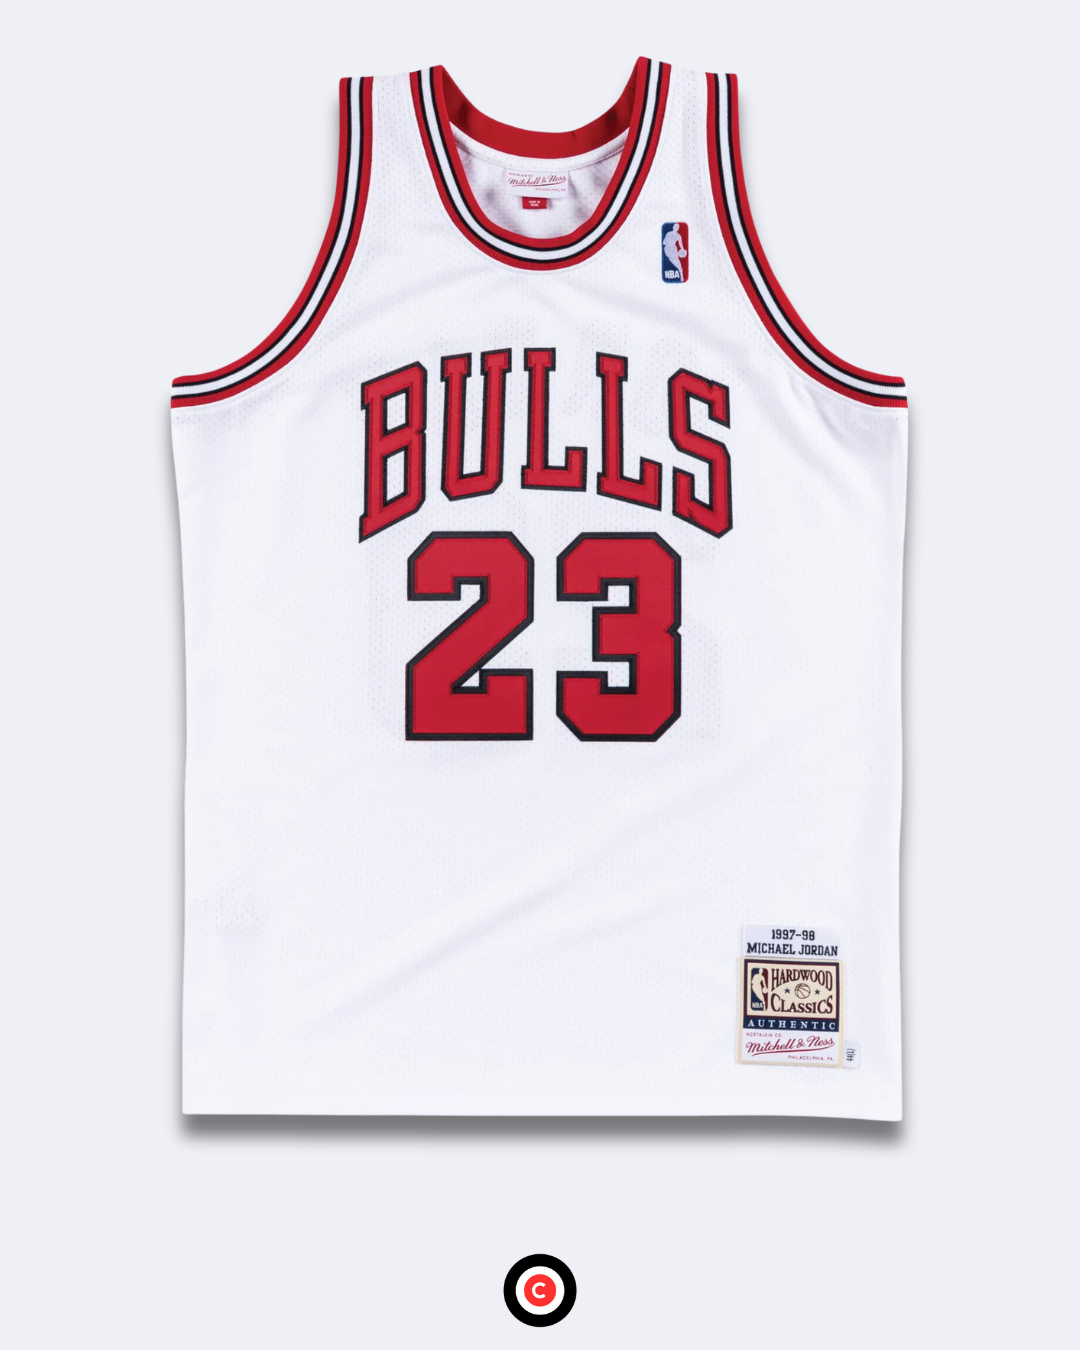 Chicago Bulls 97/98 Jersey (White/Red) - Premium  from CatenaccioDesigns - Just €60.99! Shop now at CatenaccioDesigns